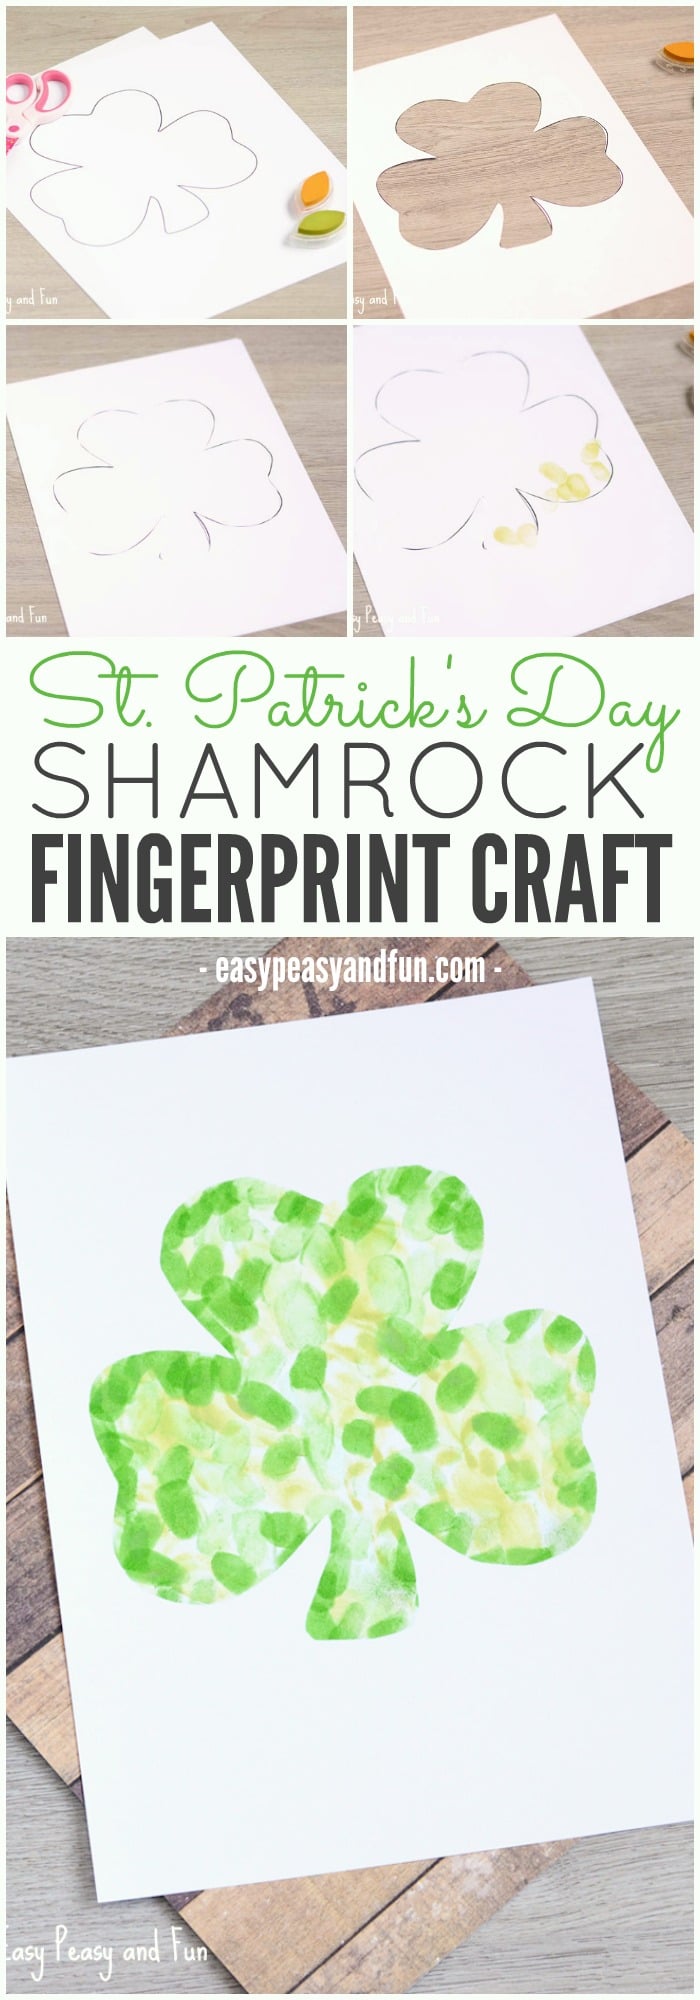 Fingerprint shamrock craft